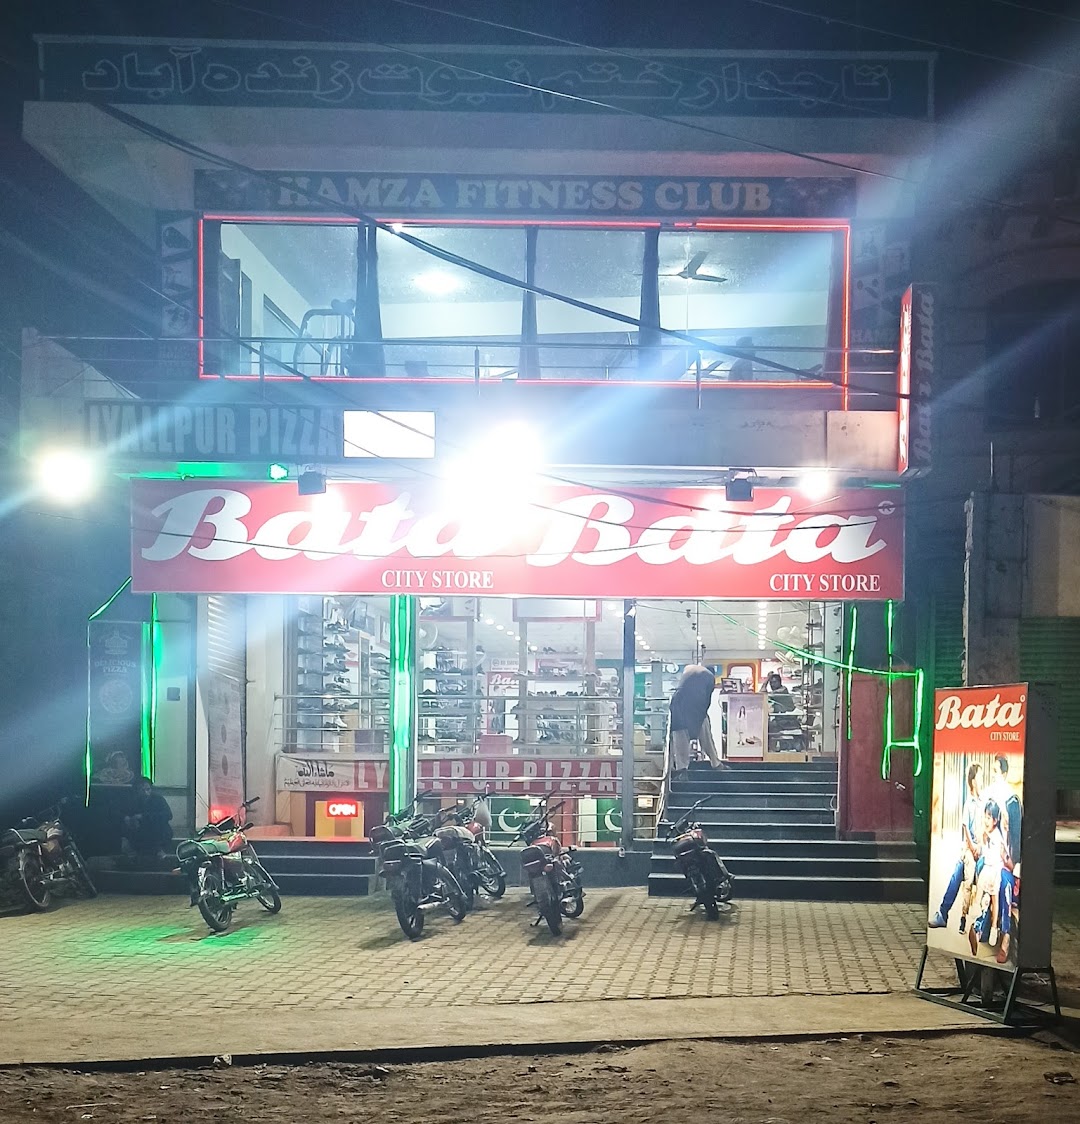 Bata City Store